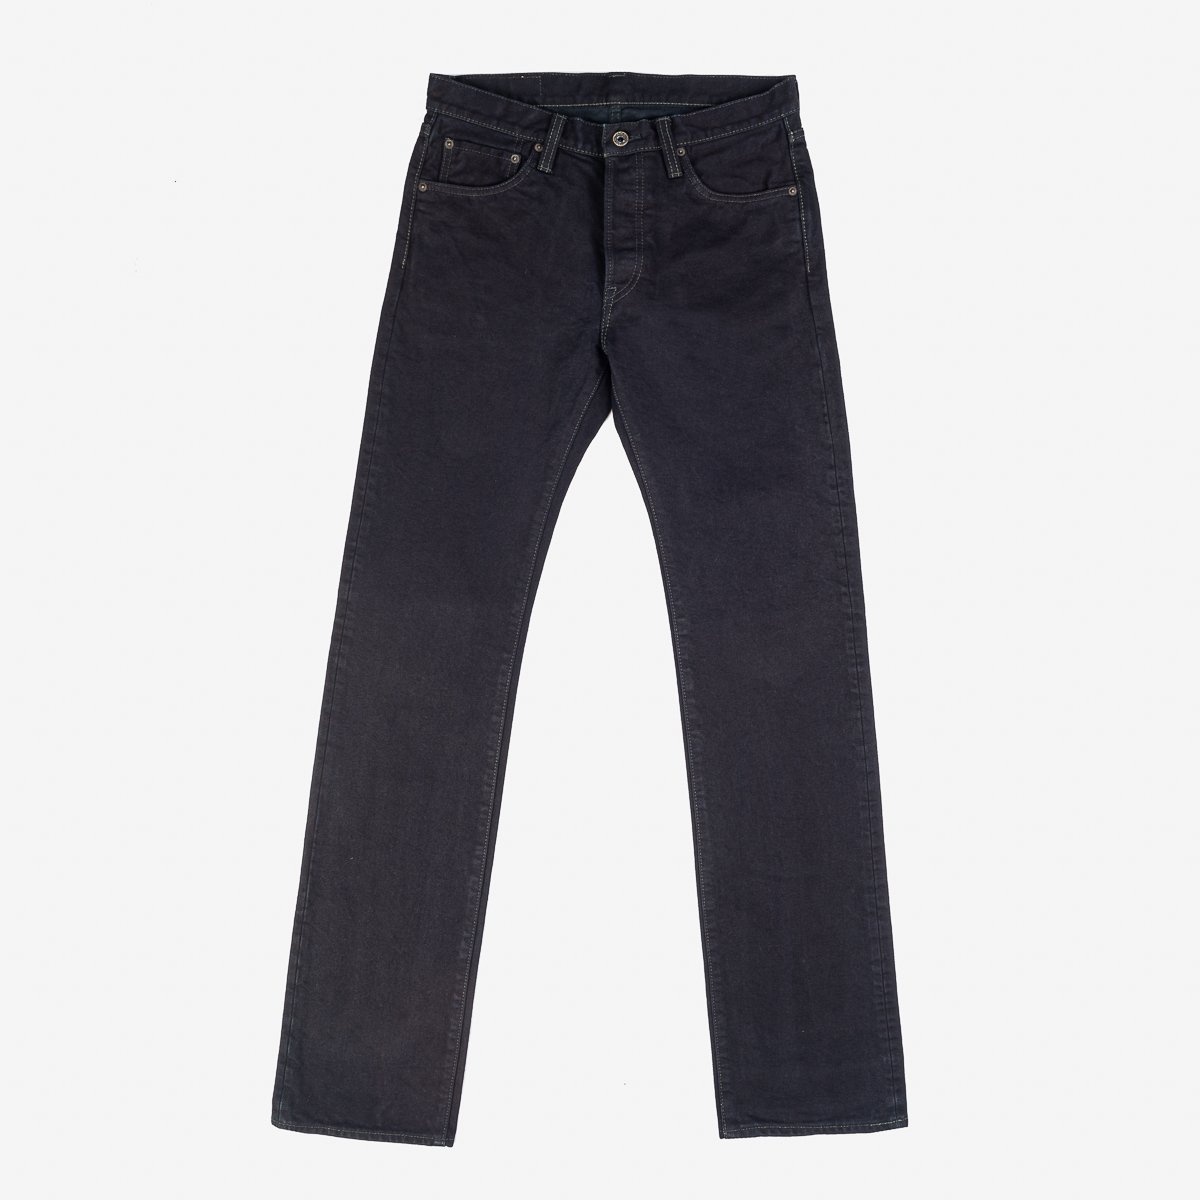 IH-666S-142od 14oz Selvedge Denim Slim Straight Cut Jeans - Indigo Overdyed Black - 1